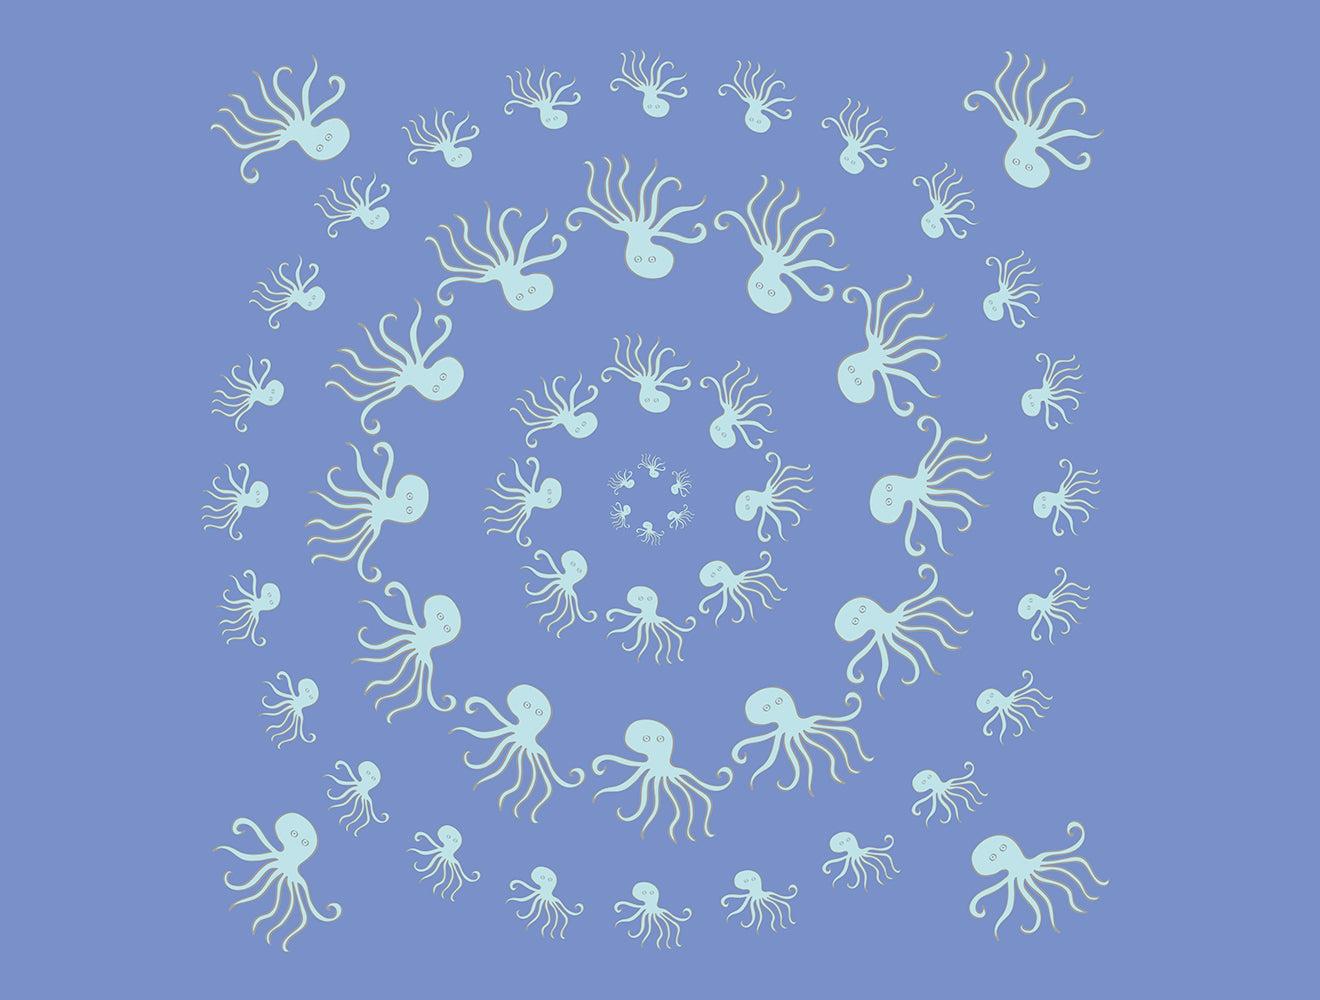 Octopus Fleece Blanket - Lt. Blue on Blue - SummerTies